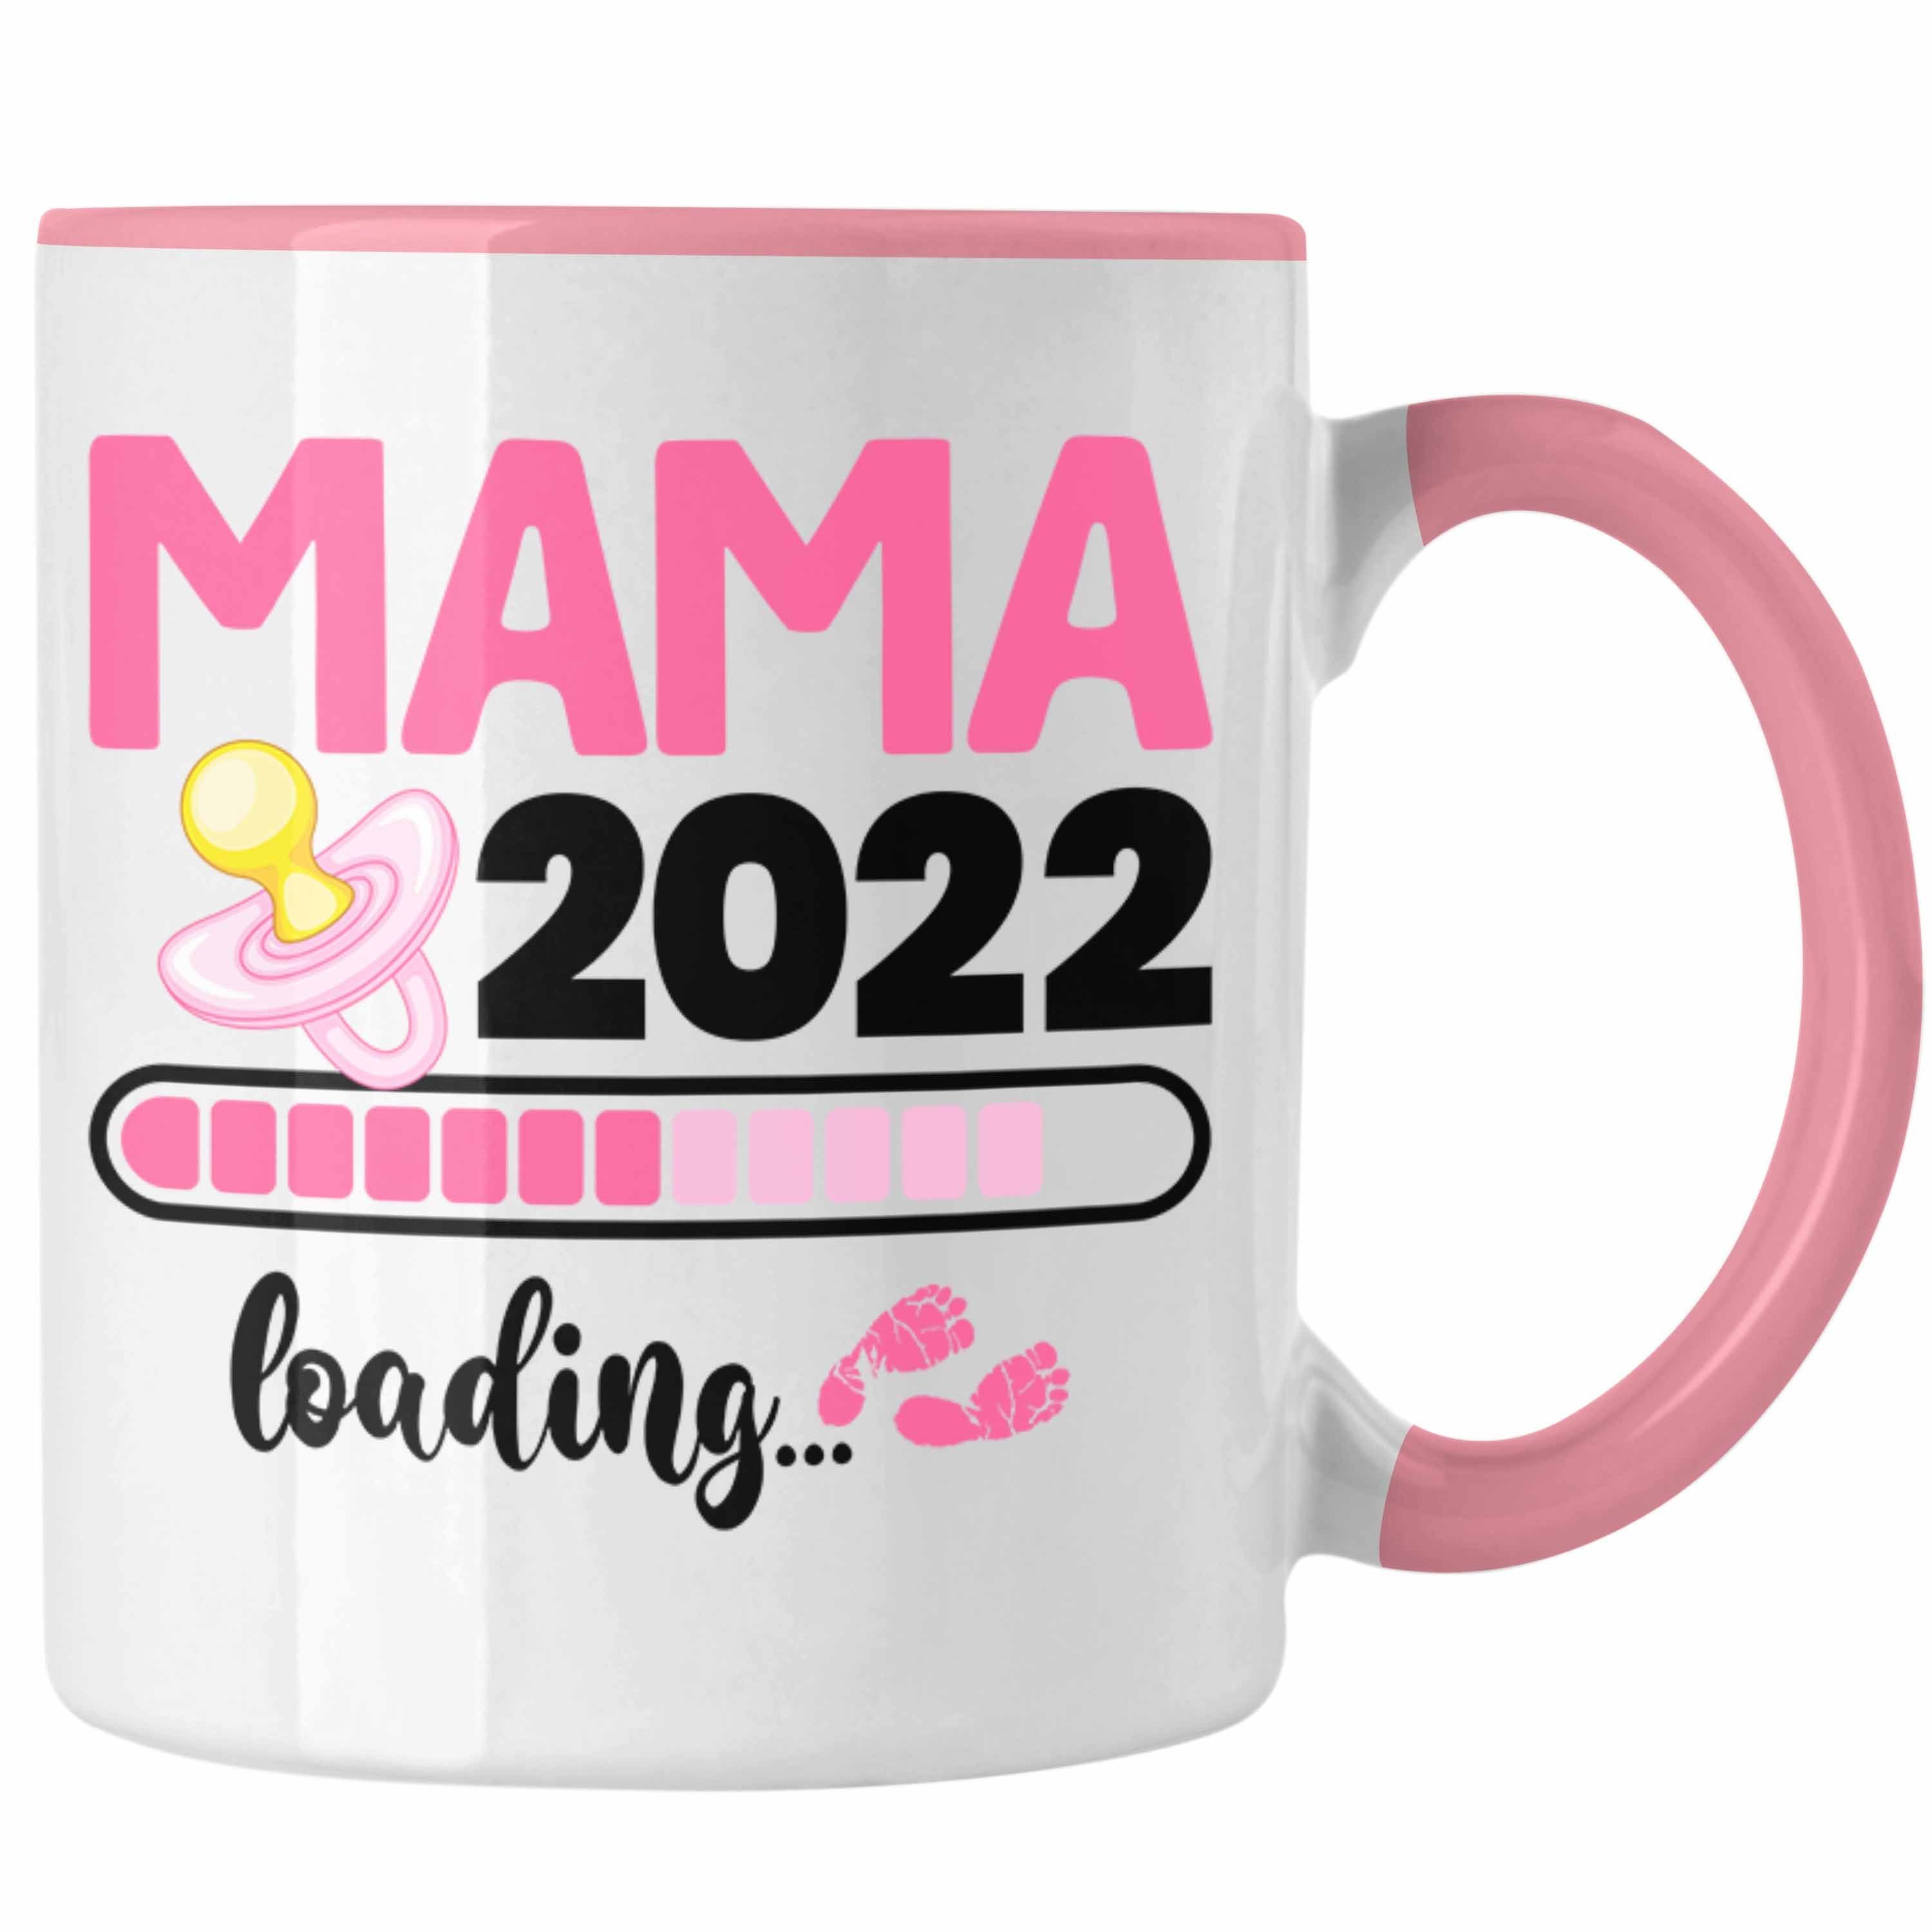 Trendation Tasse Trendation - Mama 2022 Loading Tasse Schwanger Schwangerschaftsverkündung Überraschung Rosa